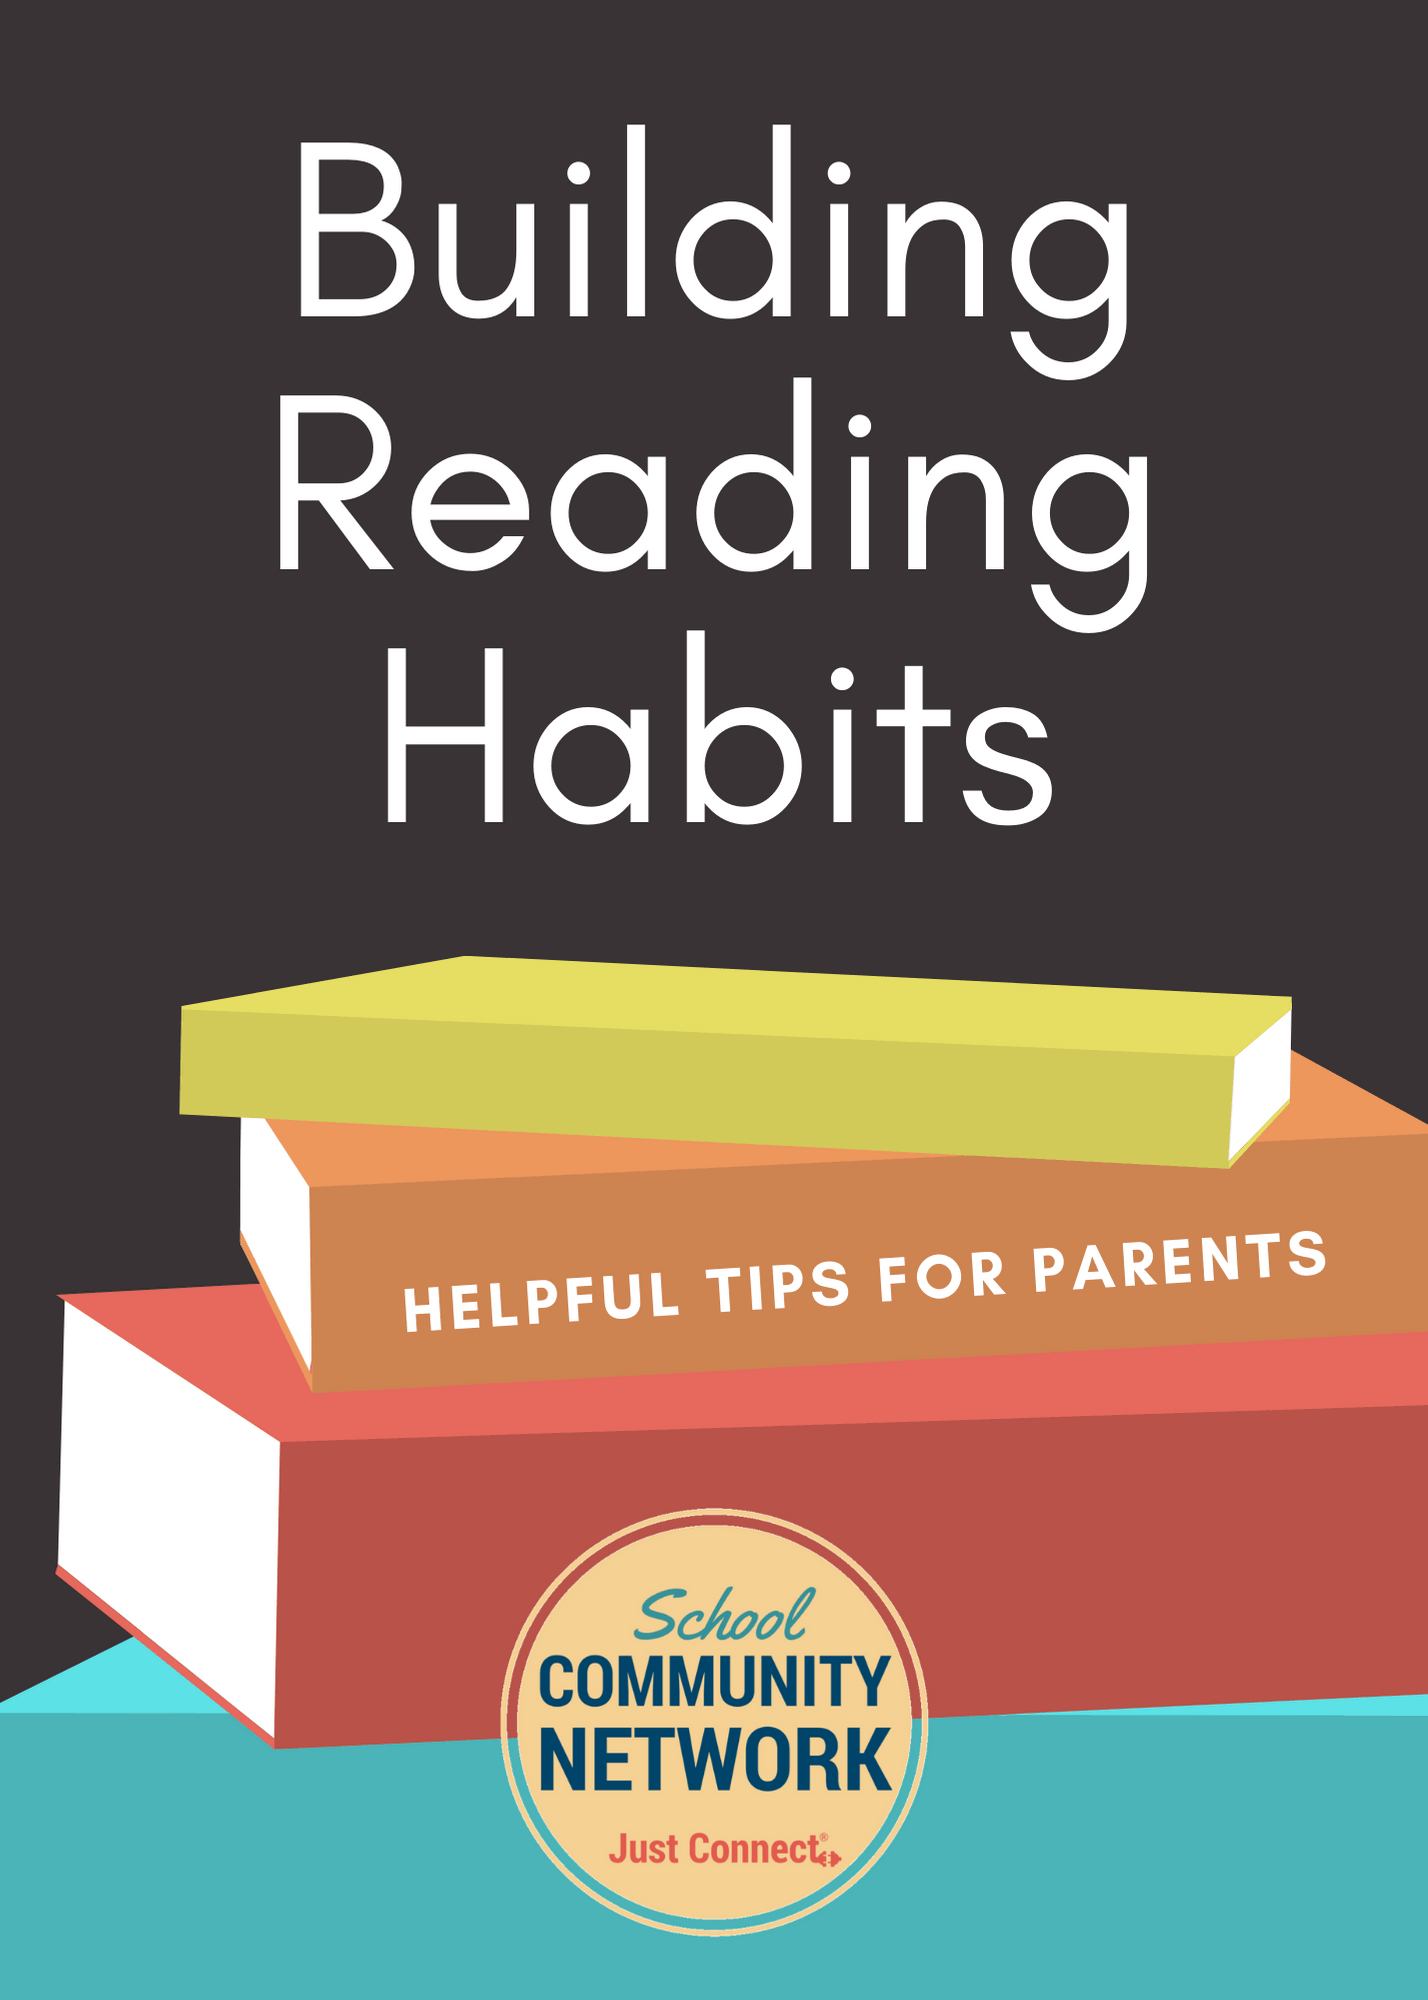 Building Reading habits